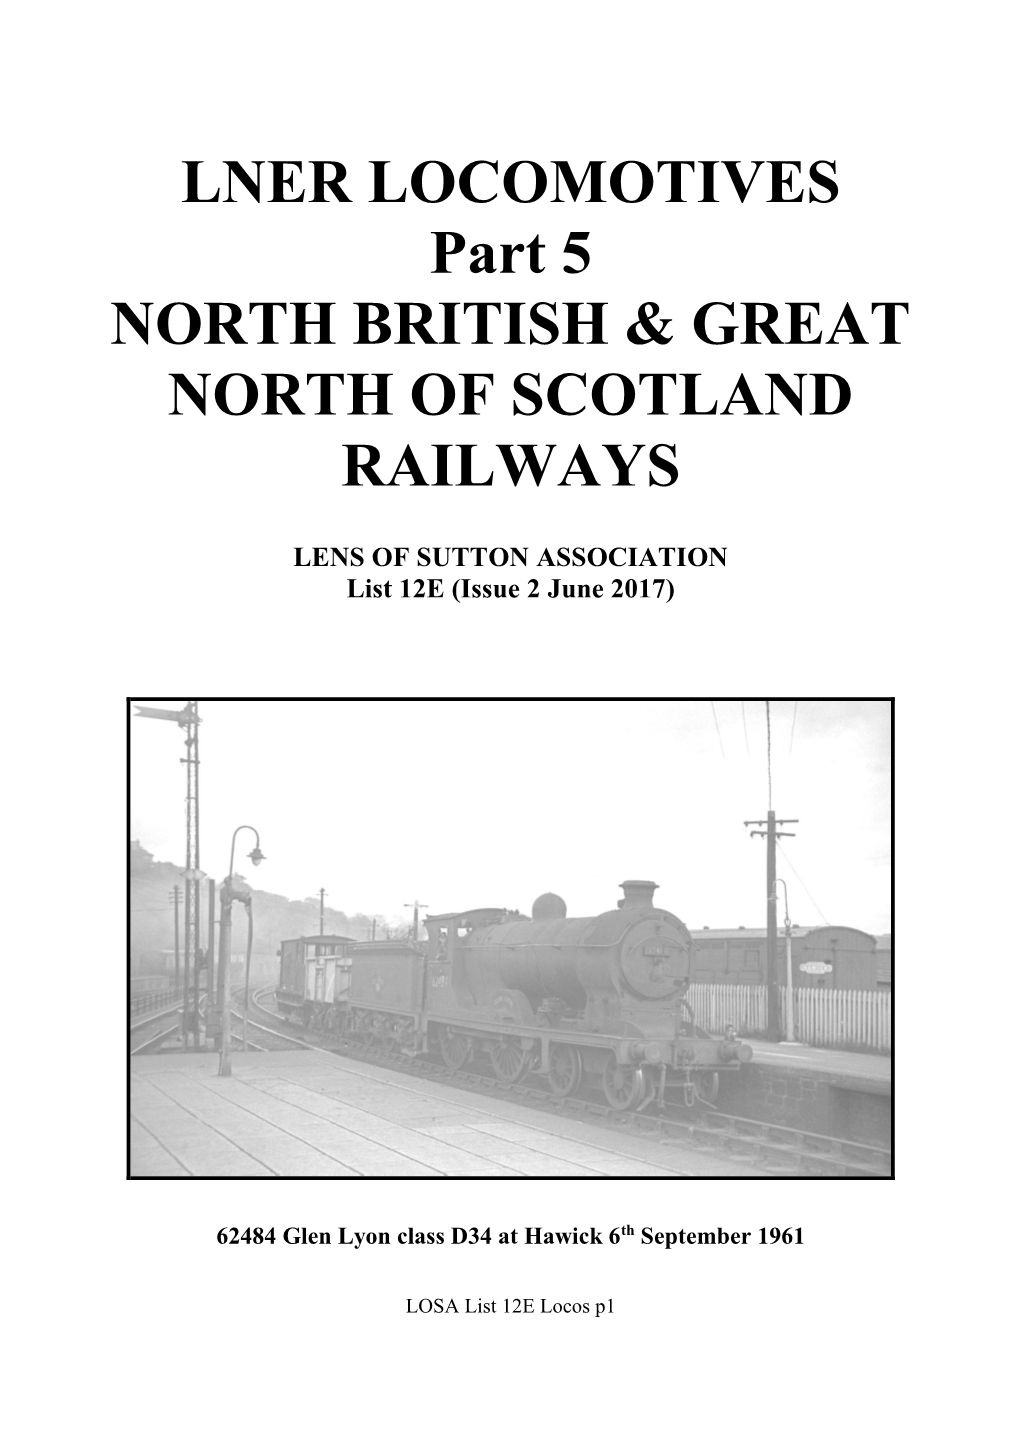 LNER LOCOMOTIVES Part 5 NORTH BRITISH & GREAT NORTH OF